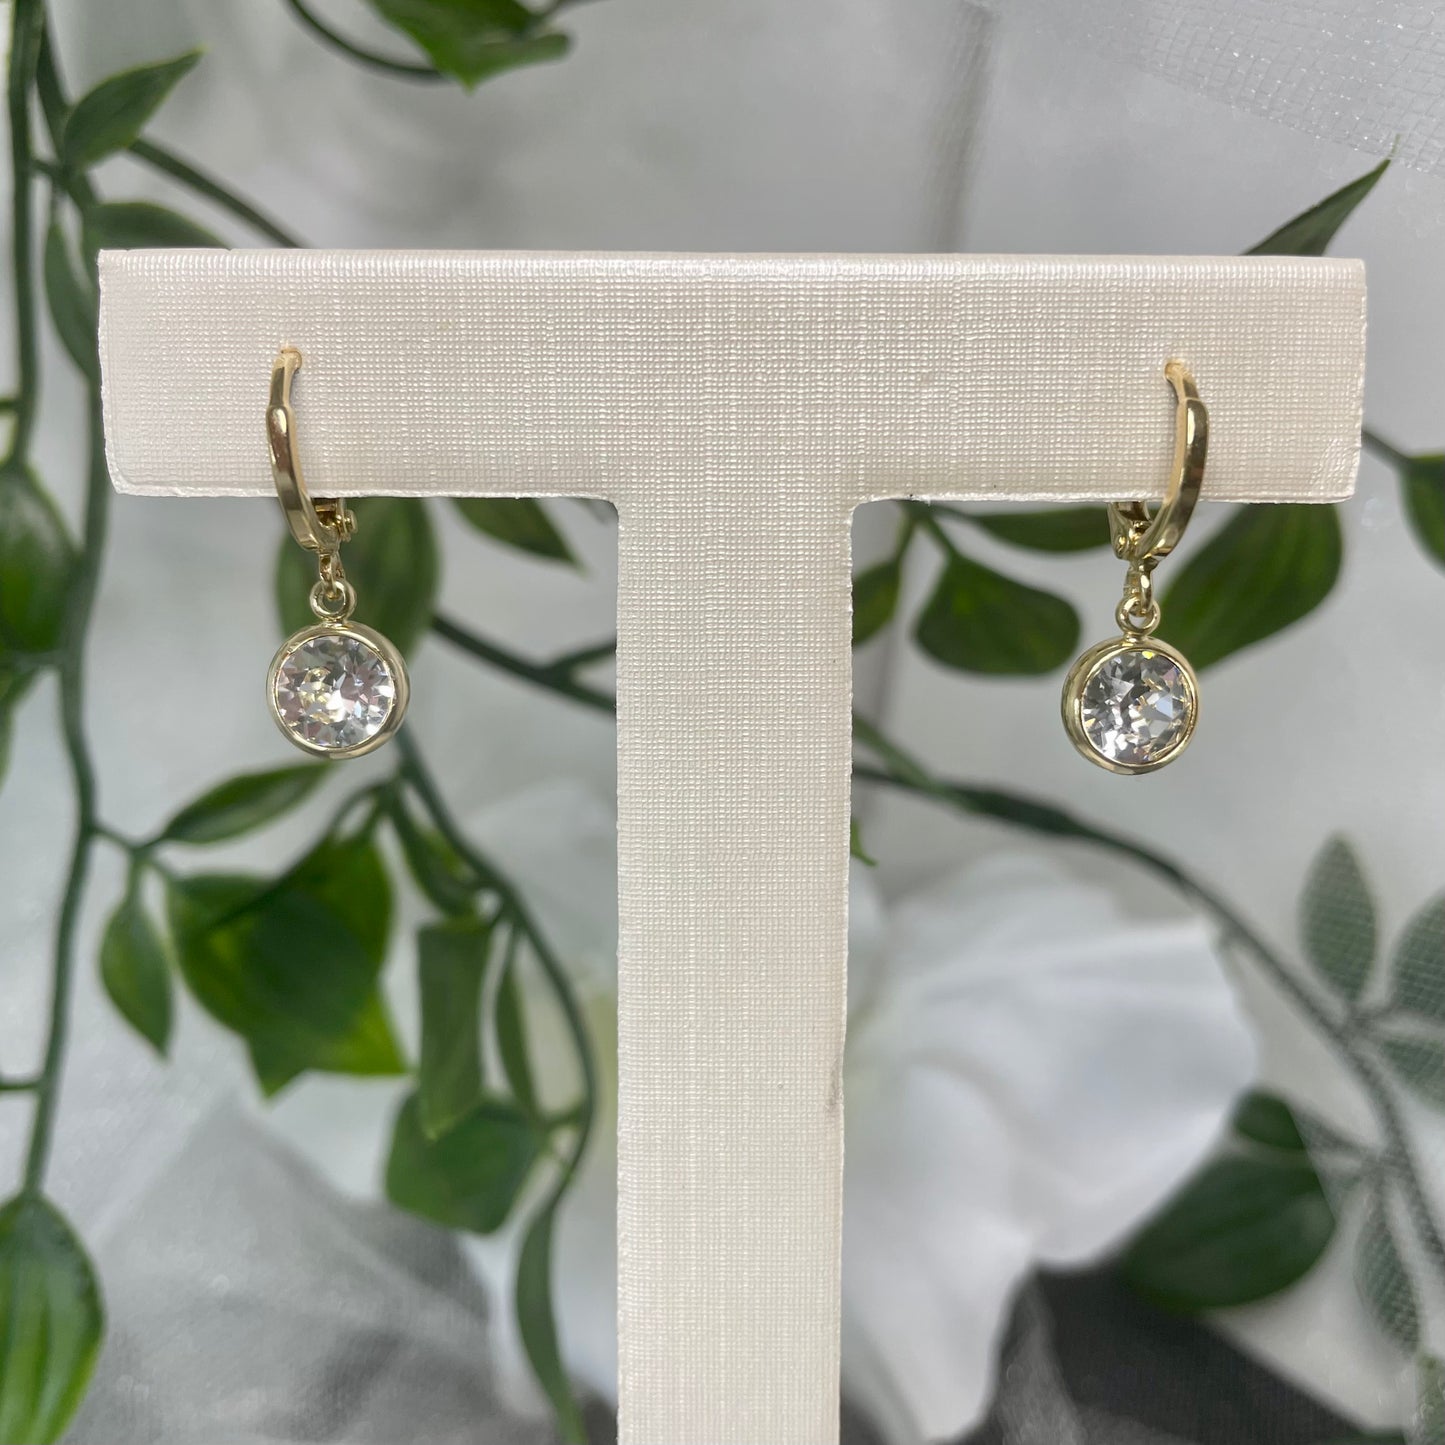 Georgini Gold bridal earrings featuring Swarovski crystal CZ by Divine Bridal.